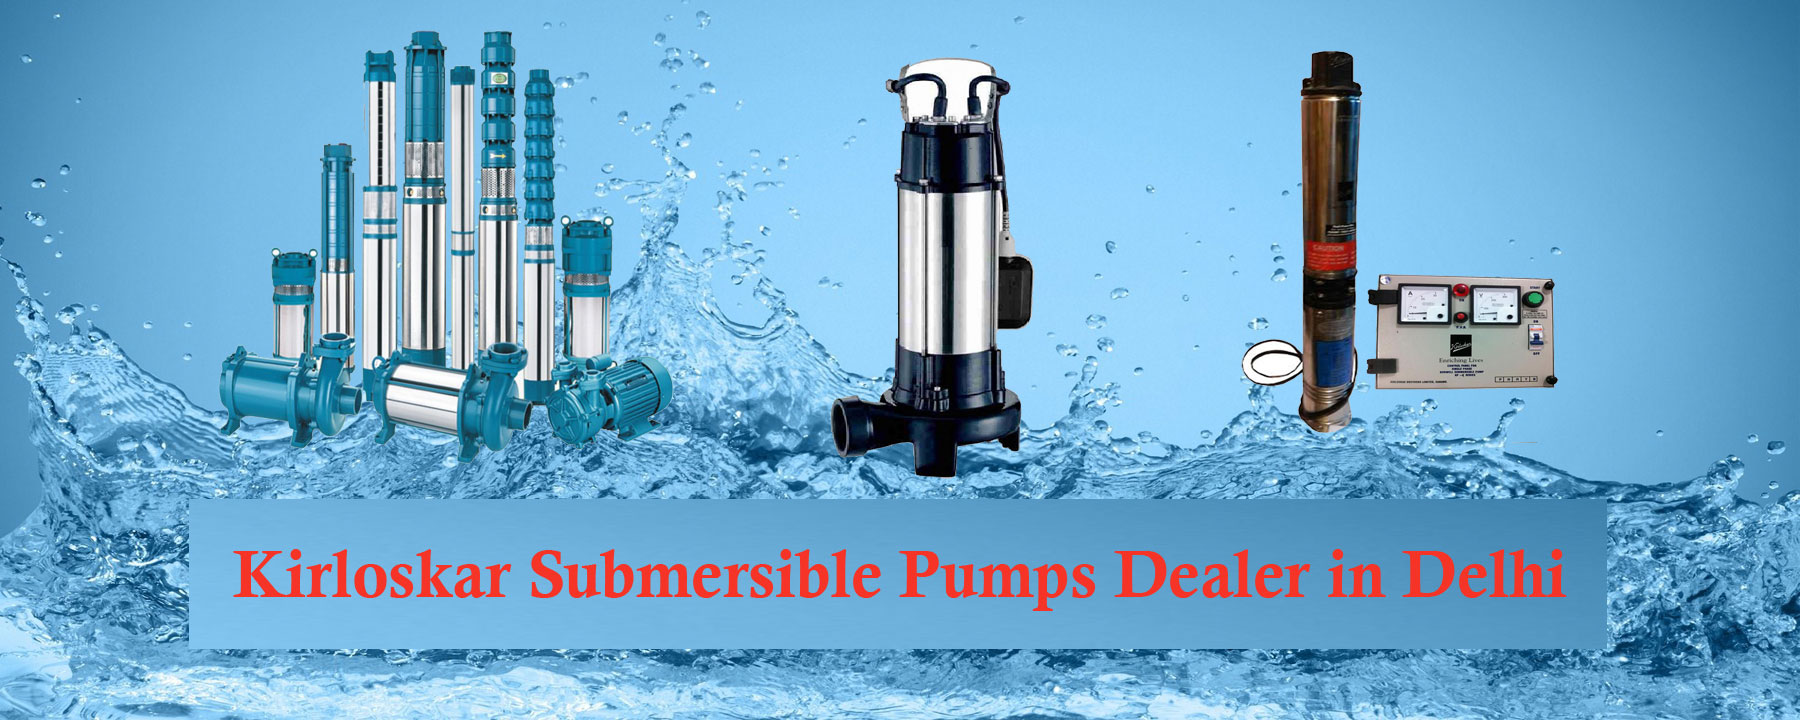 Kirloskar Submersible Pumps Dealer in Delhi   